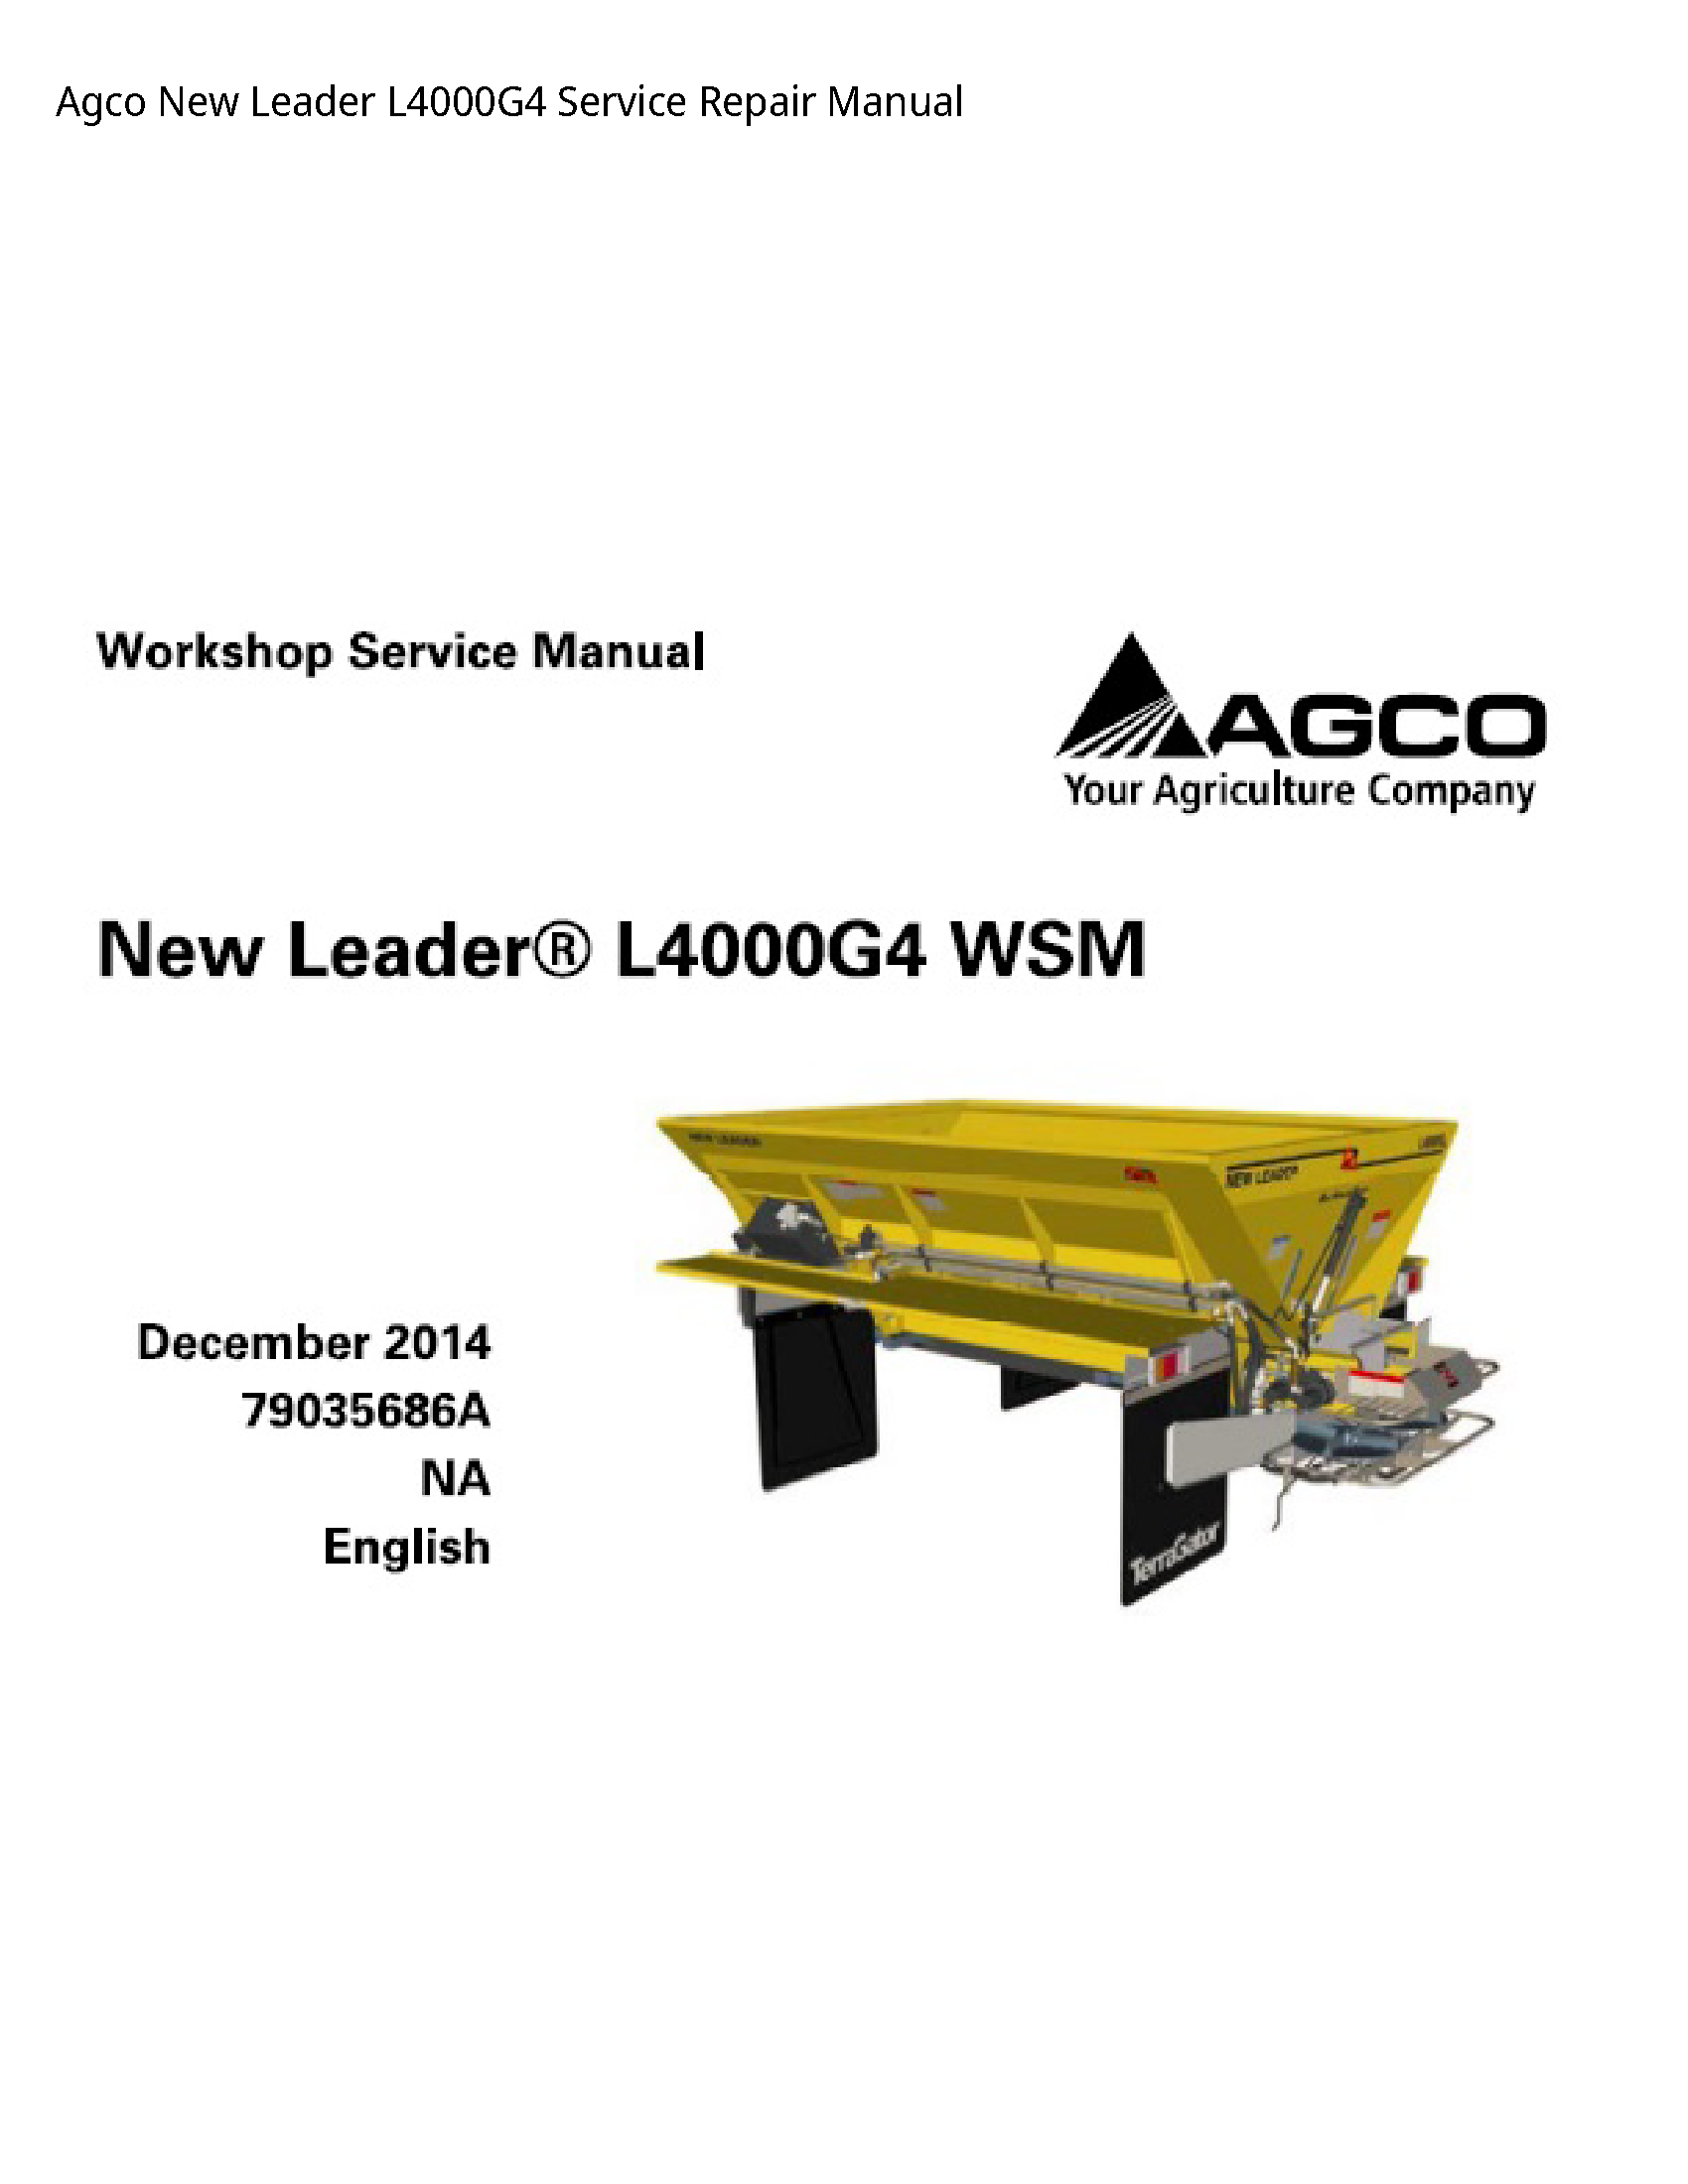 AGCO L4000G4 New Leader manual